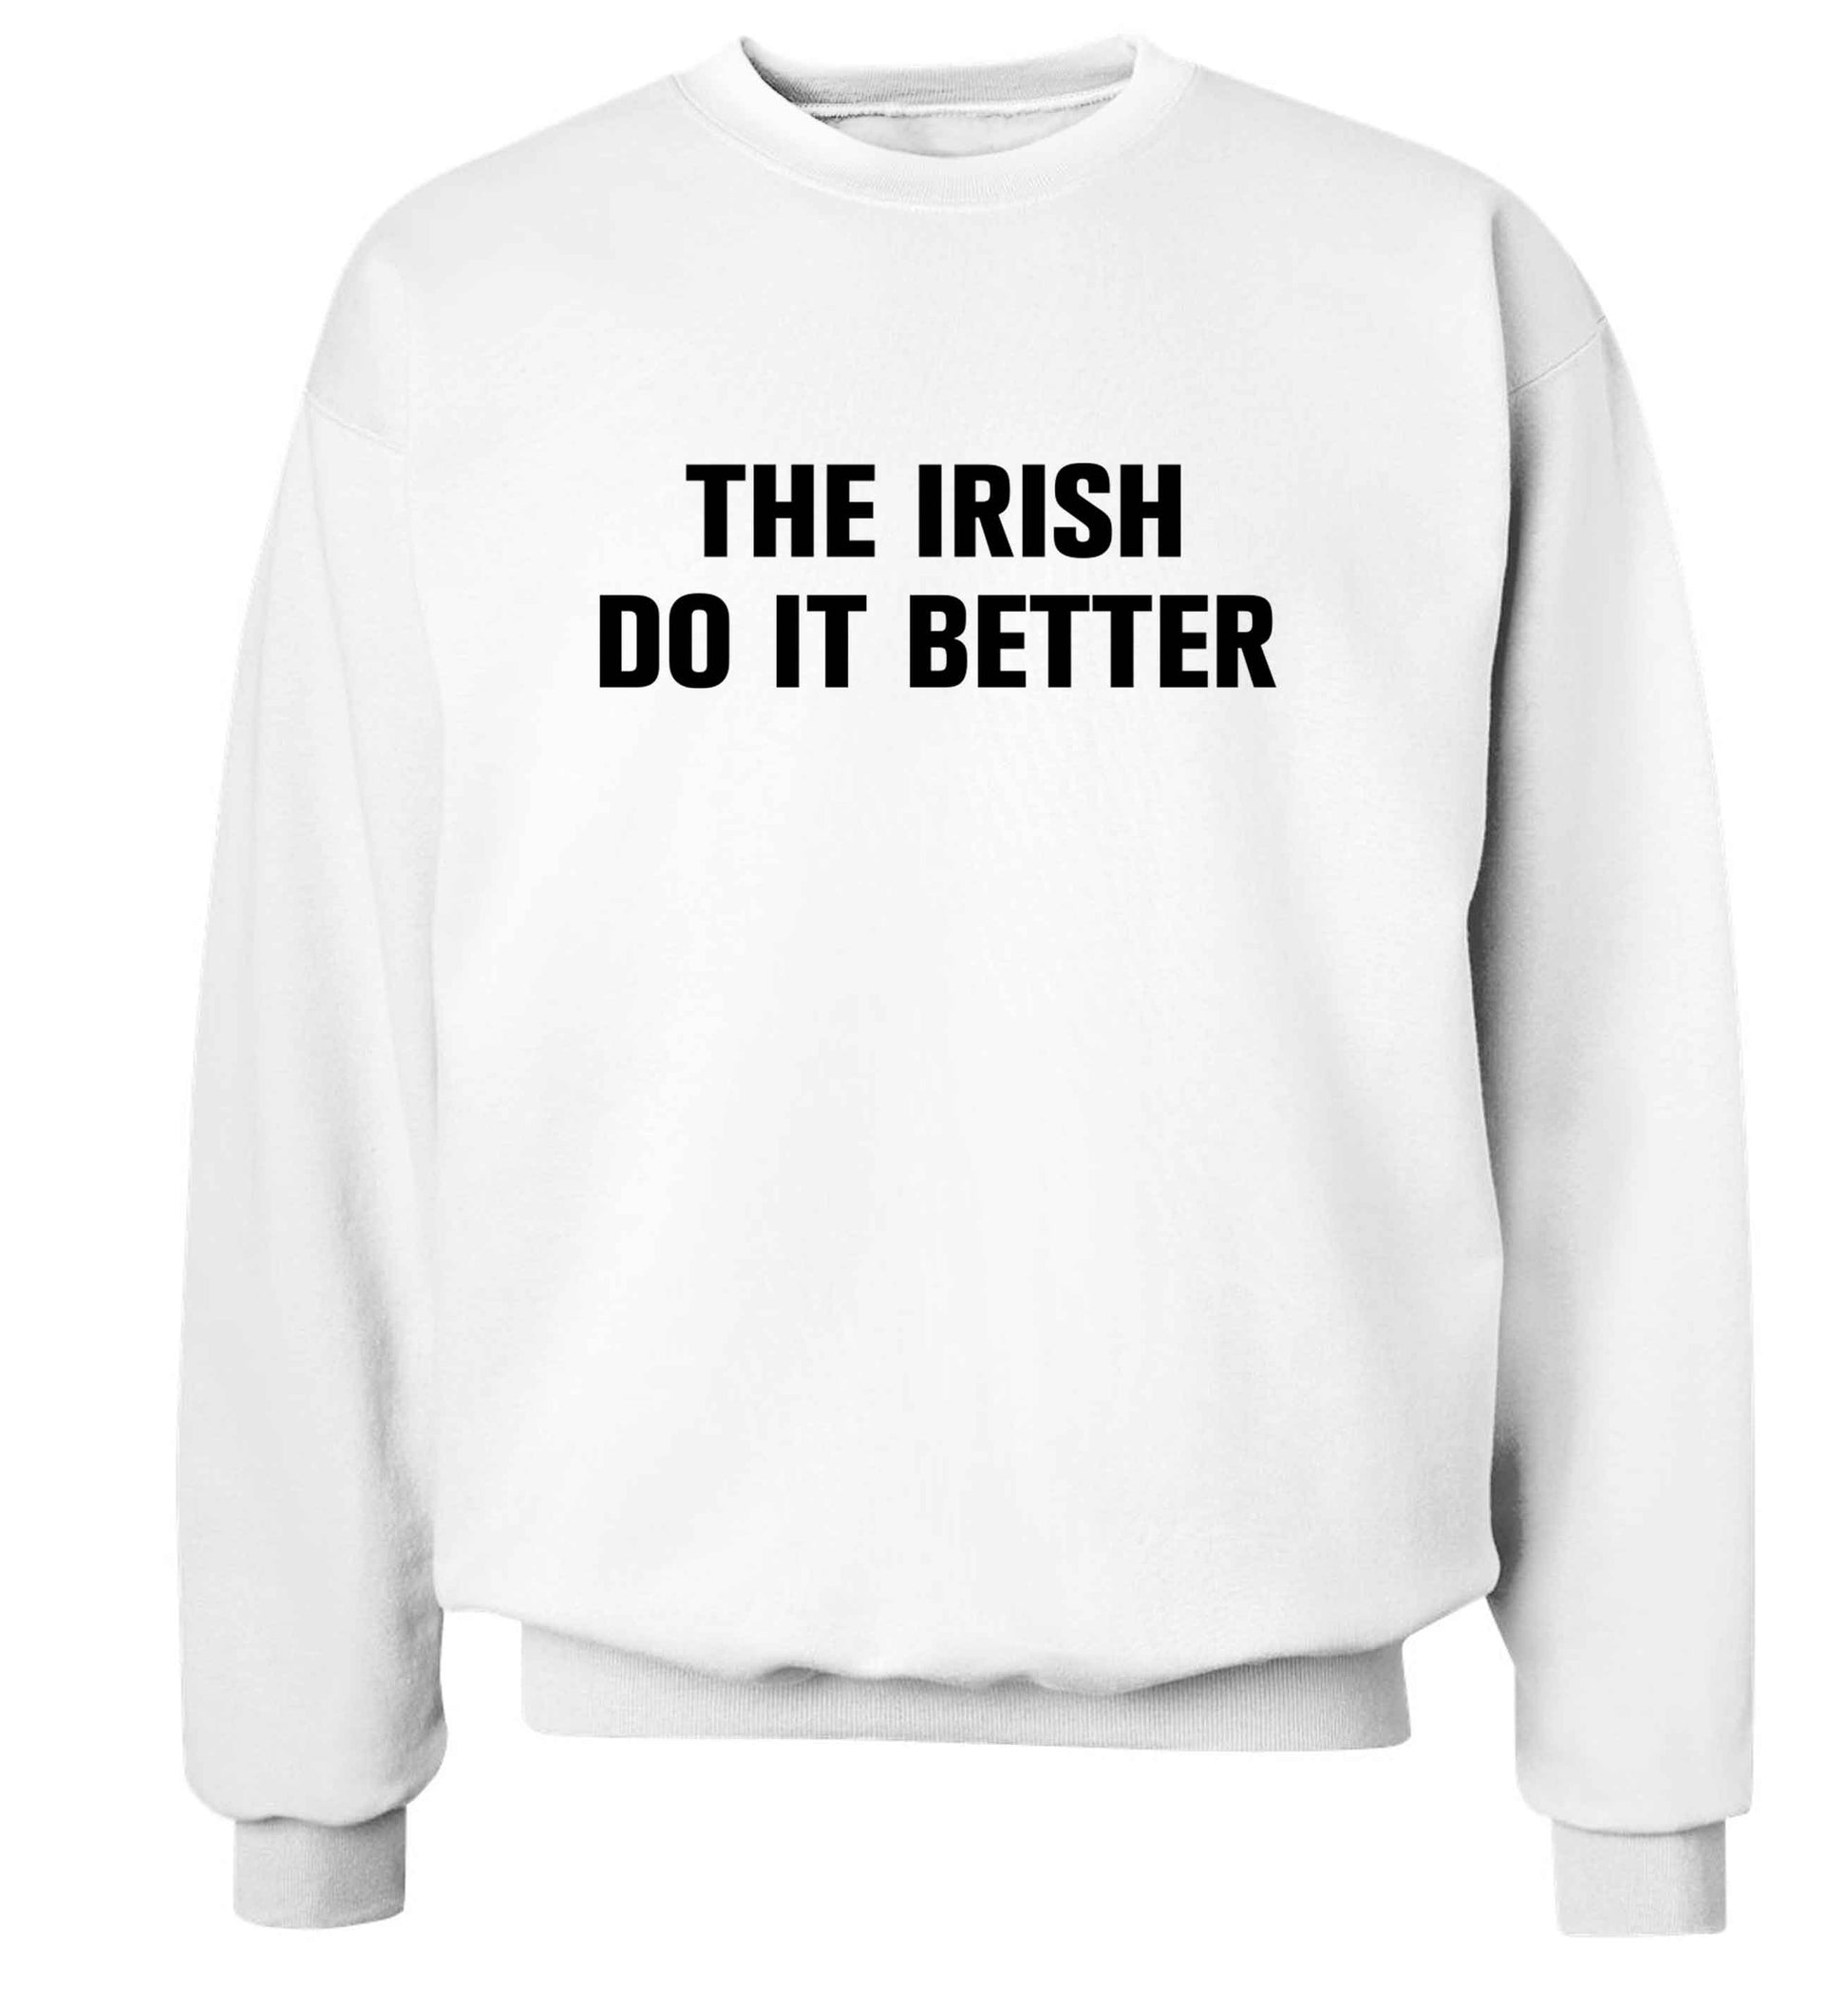 The Irish do it better adult's unisex white sweater 2XL